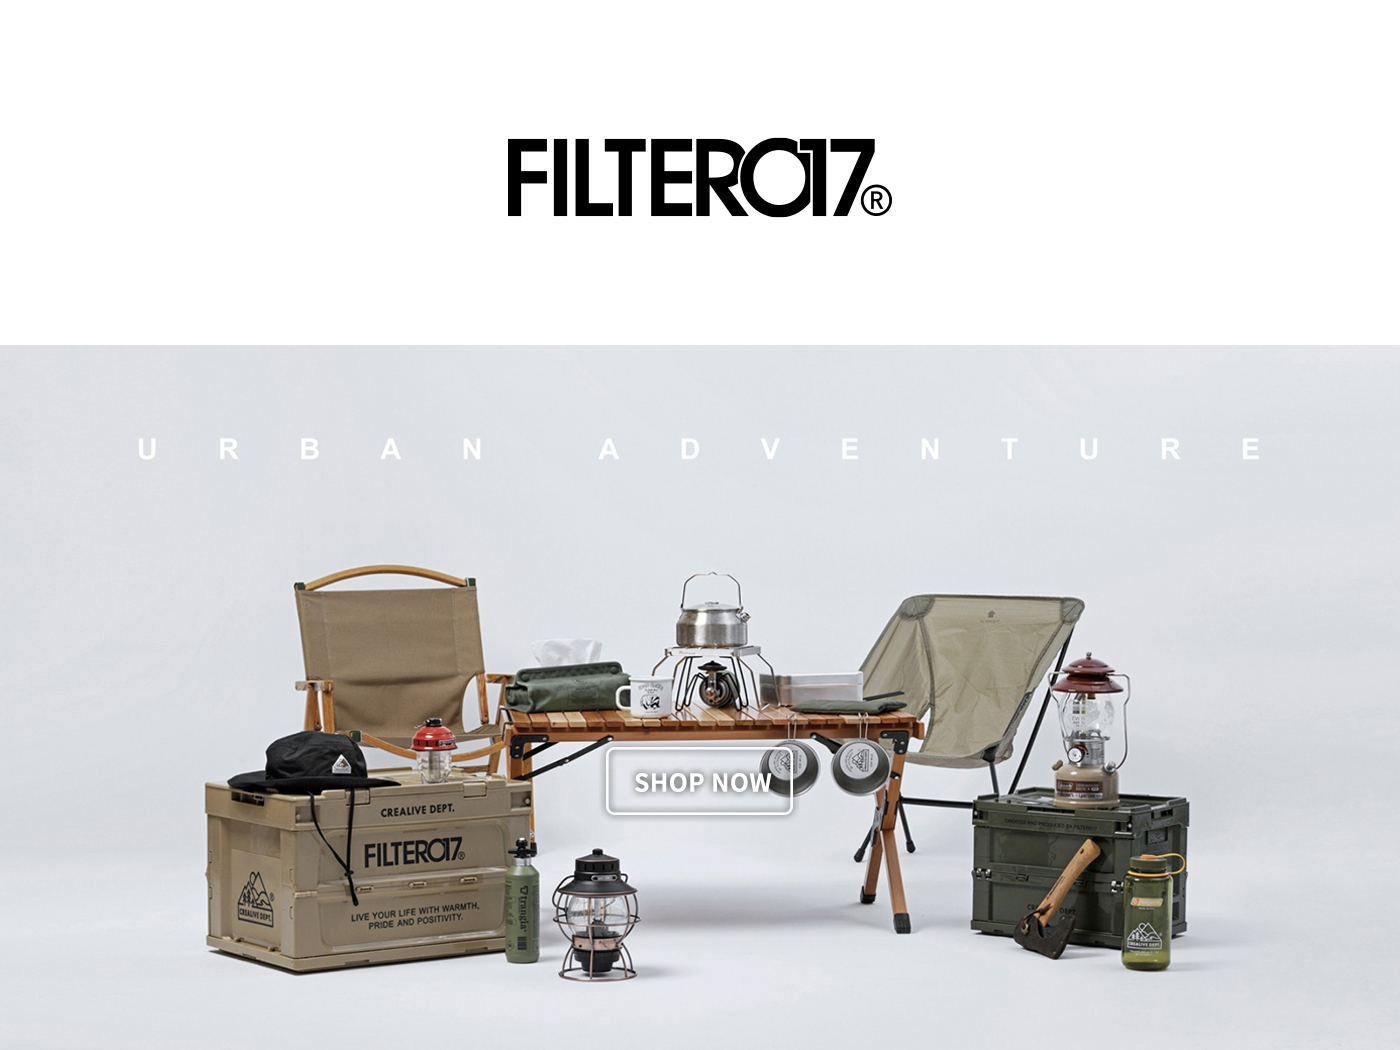 filter017,filter017 收納箱,filter017 台北,filter017帽子,filter017 crealive dept,台灣品牌,台灣設計品牌,台灣服裝品牌